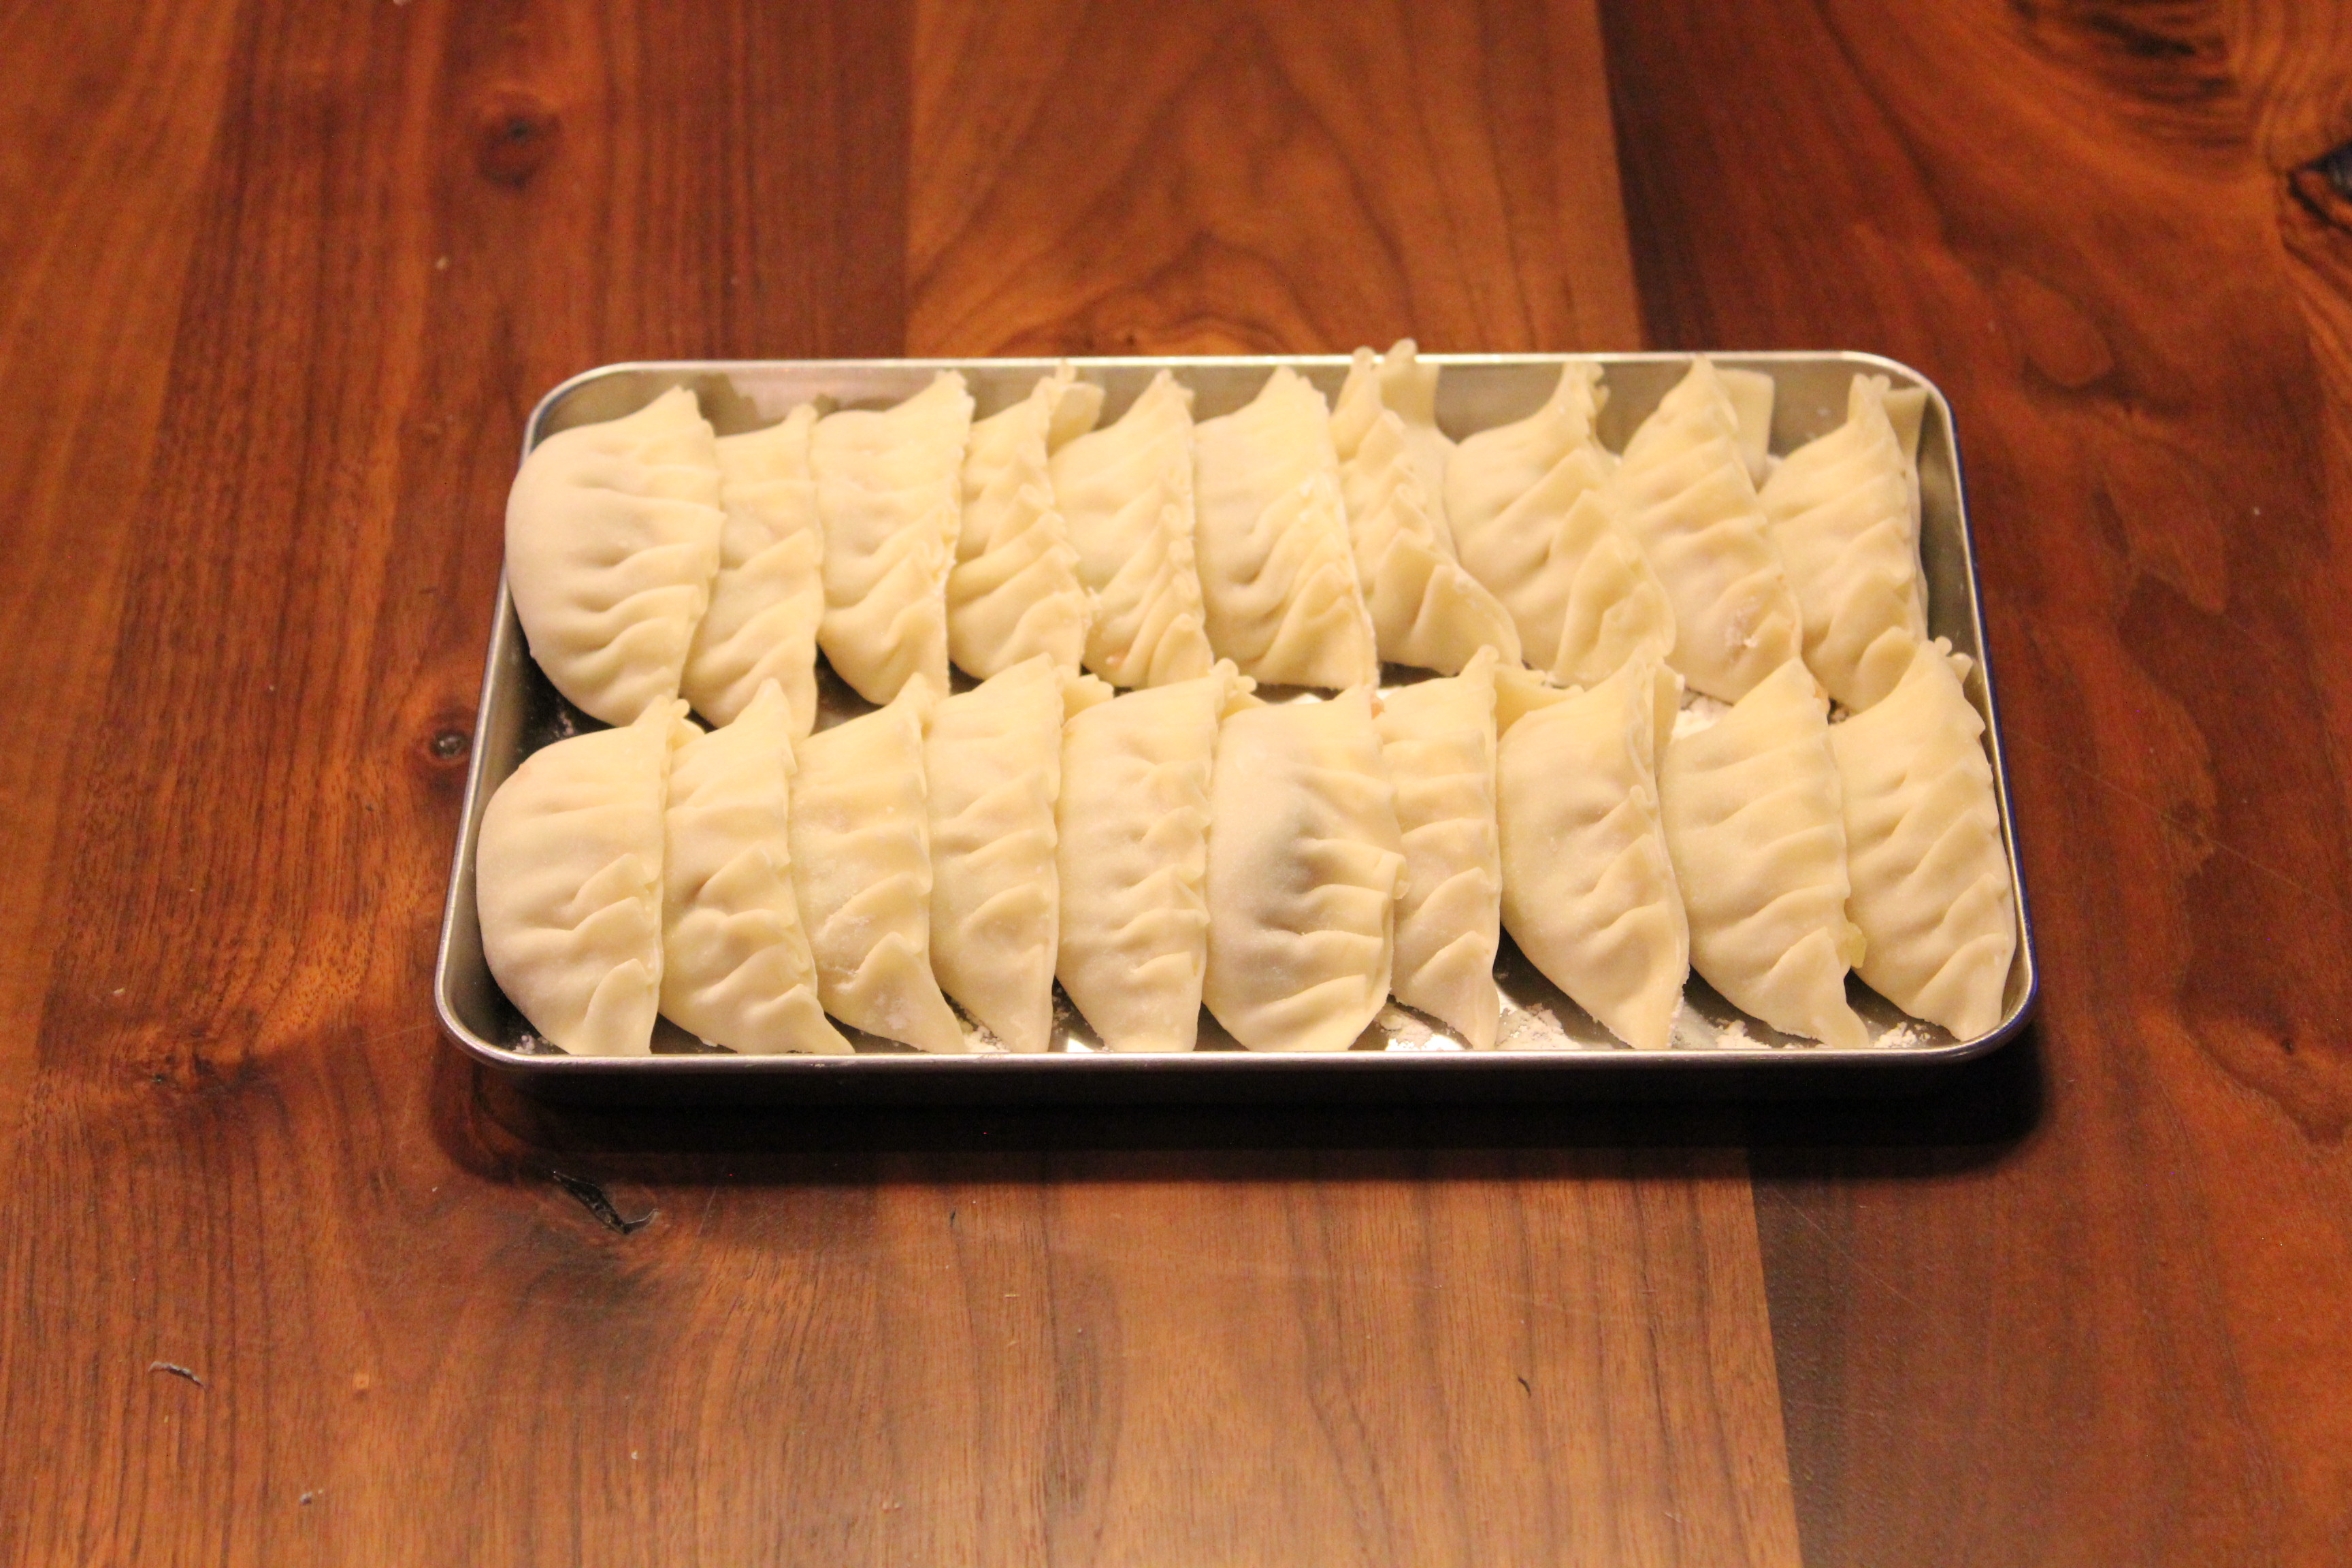 GYOZA (dumpling from scratch)
DASHIMAKI TAMAGO (Japanese omlette)
MISO SOUP
RICE